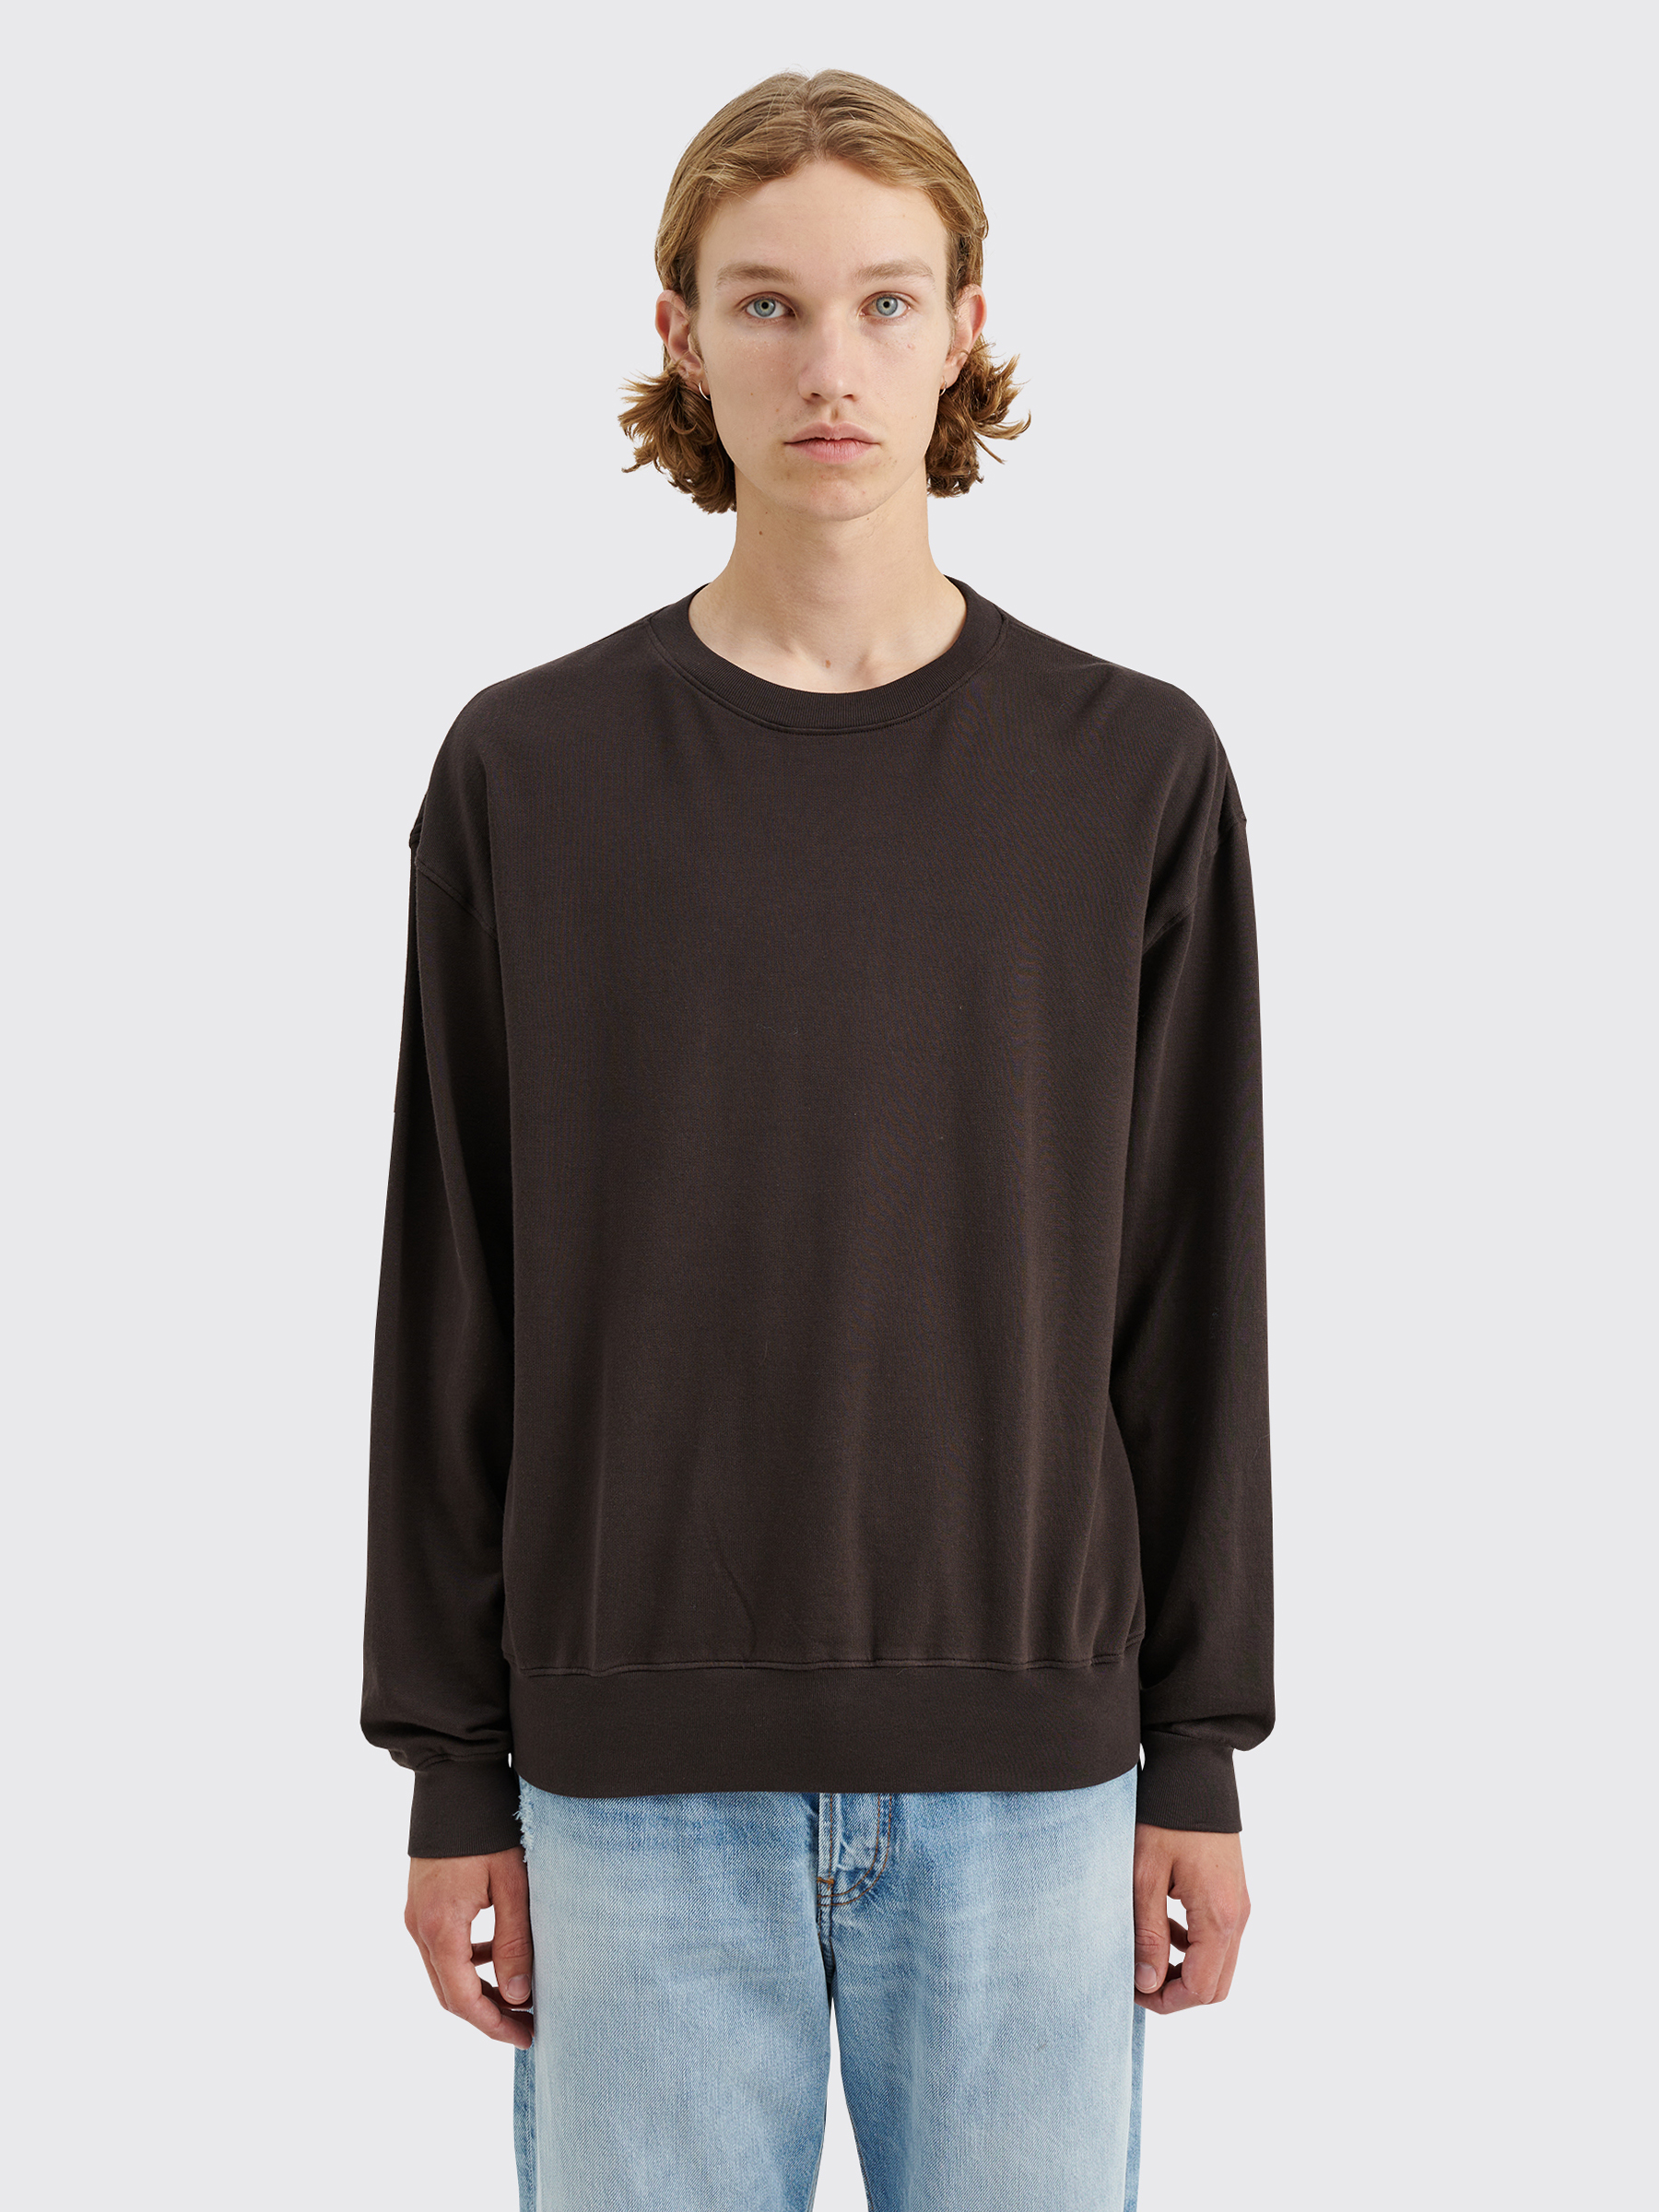 Très Bien - Auralee Super High Gauge Sweater Dark Brown